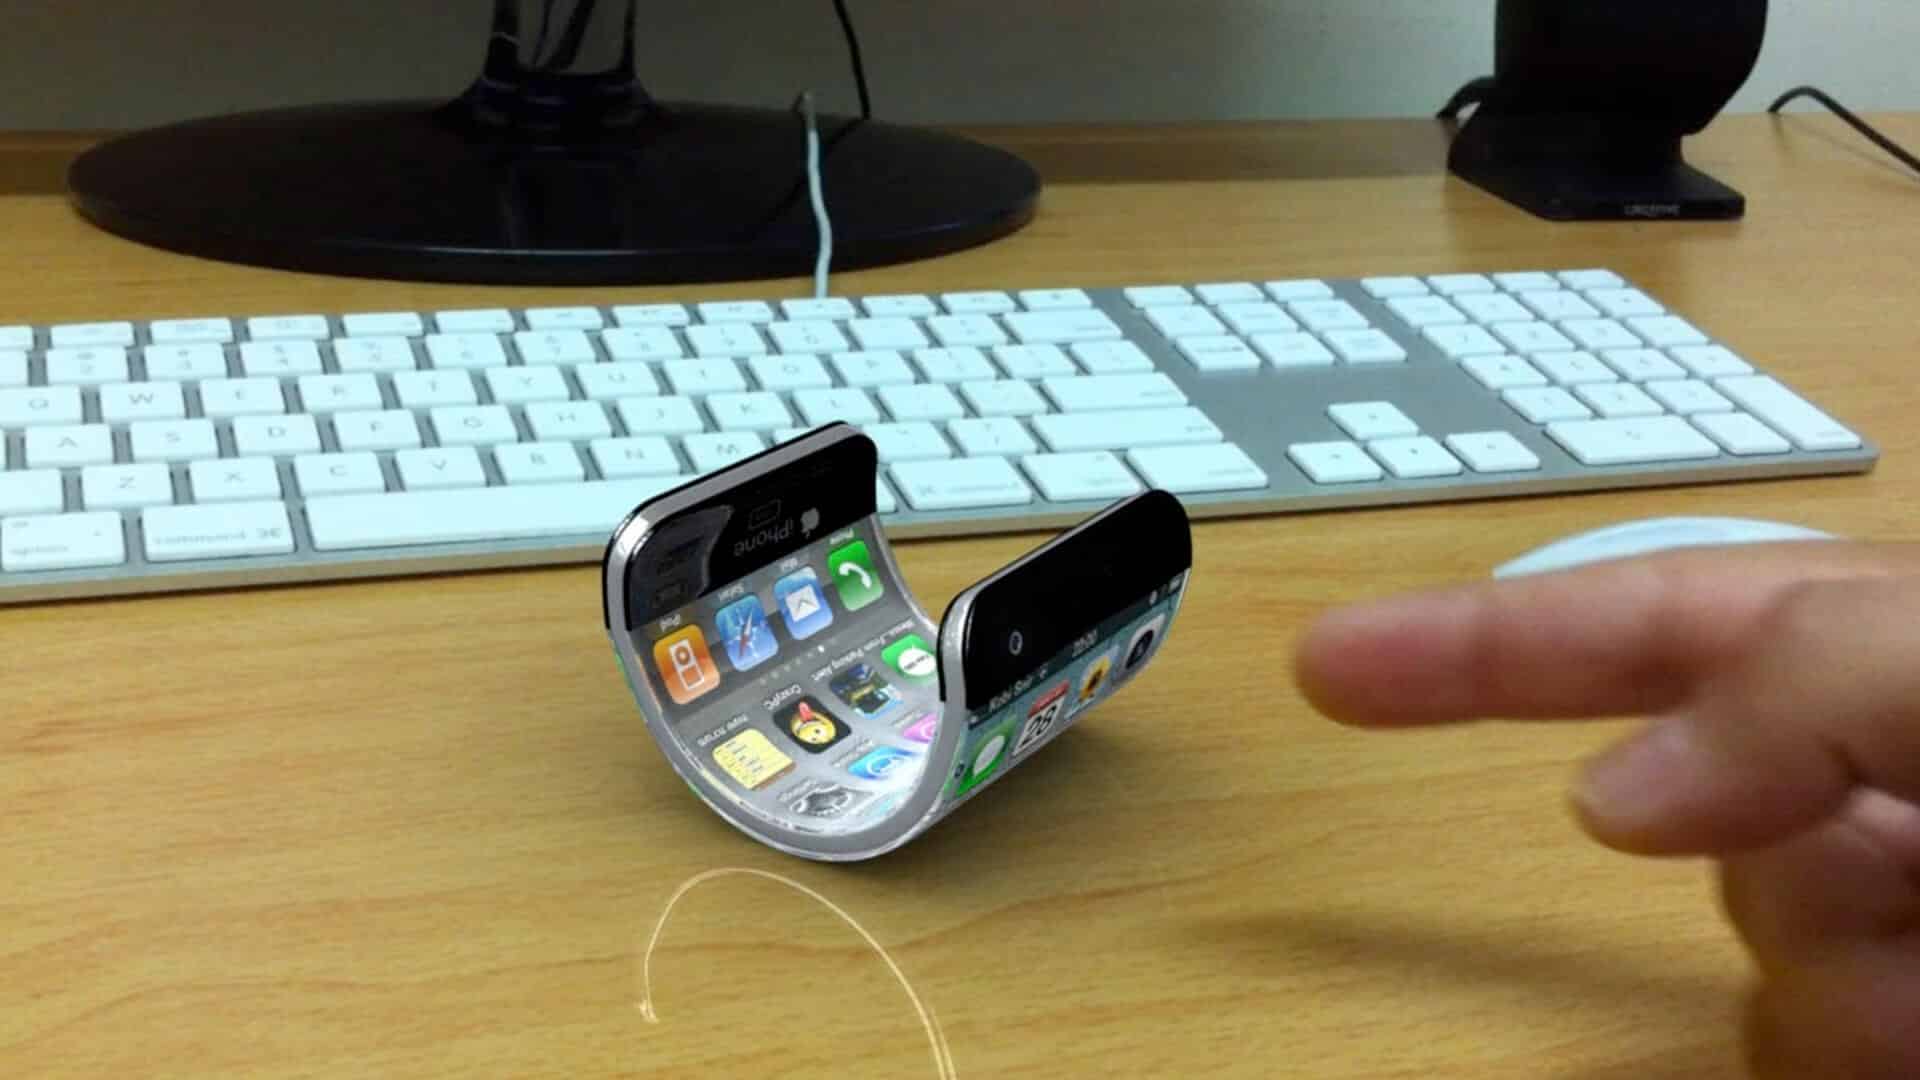 Future iphone features